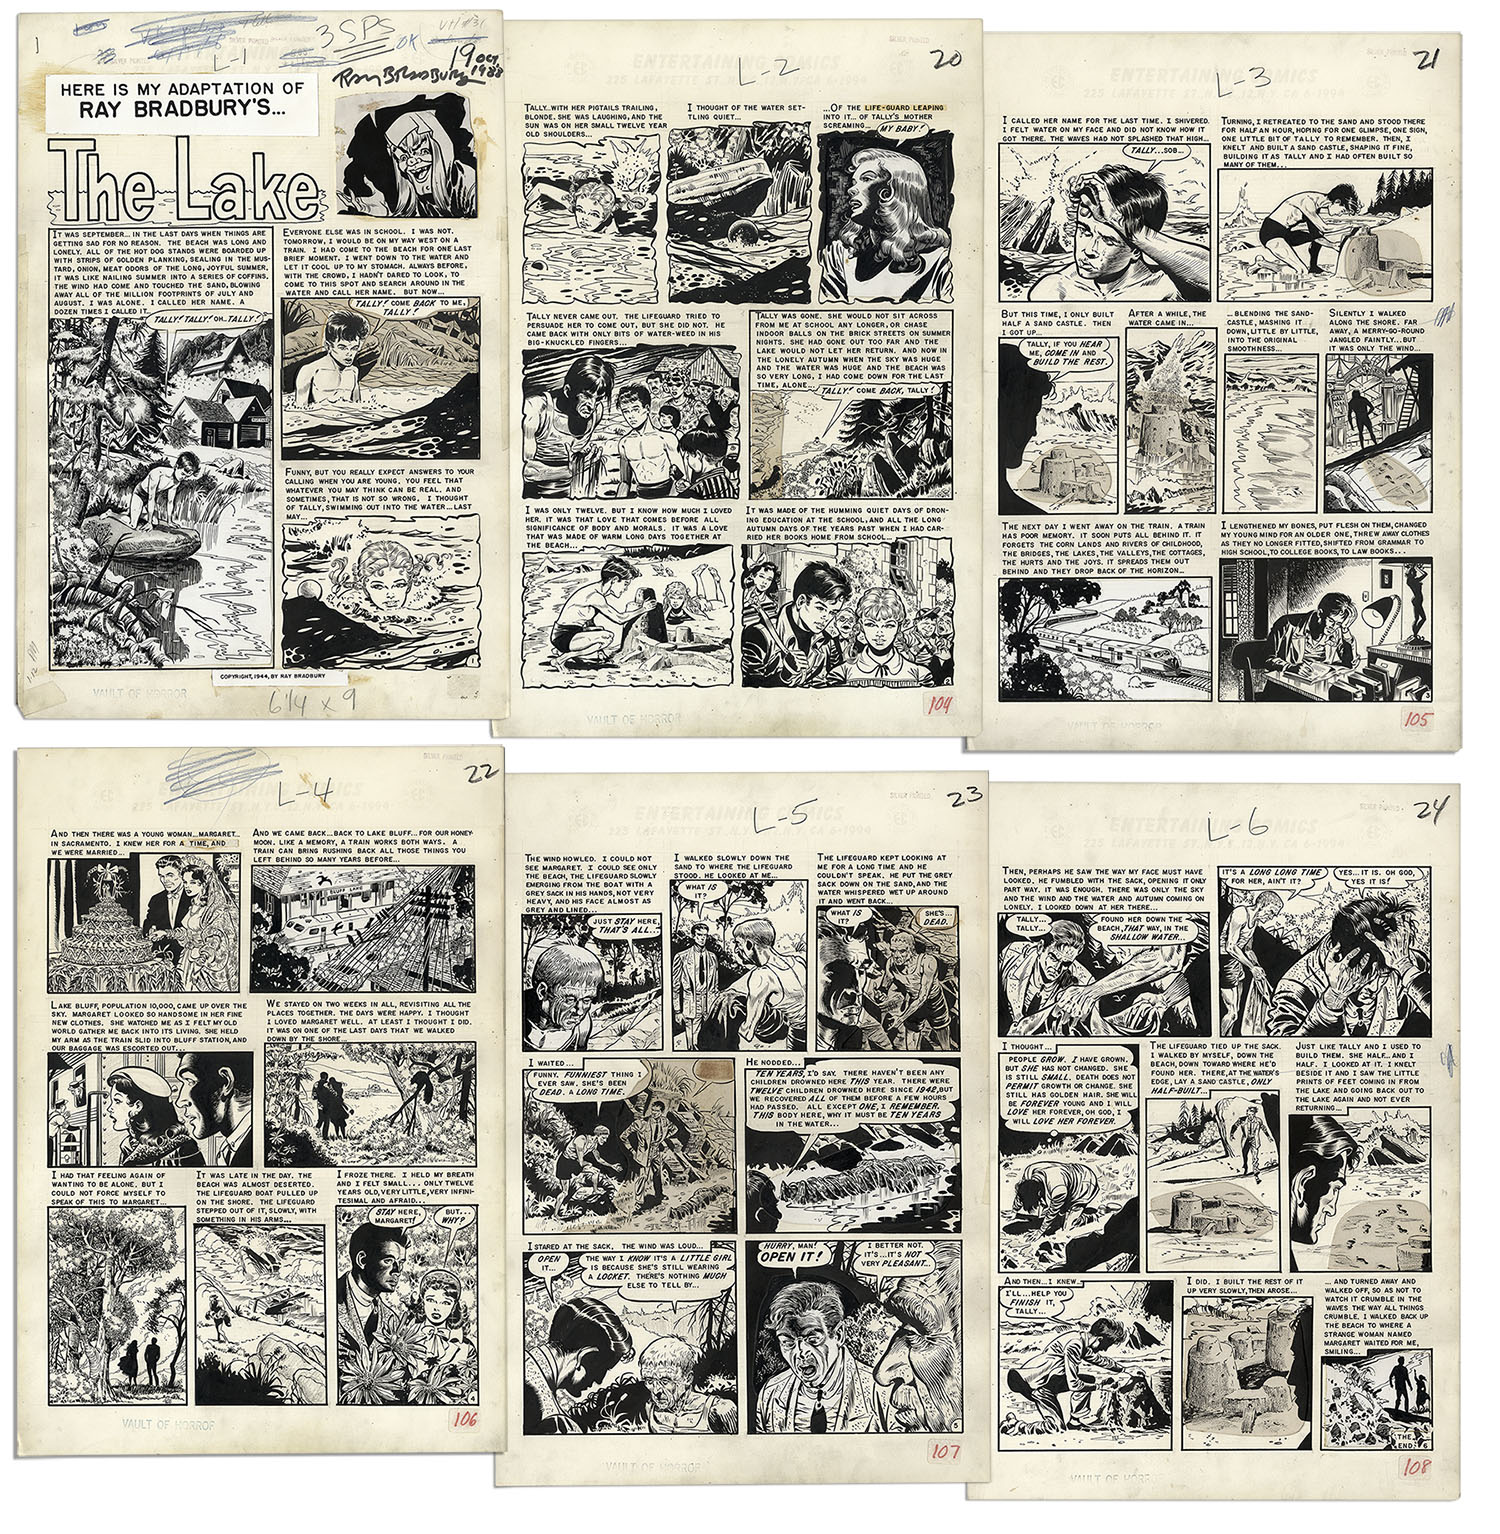 Joe Orlando Art Joe Orlando Complete Six Page Story From EC Comics ''Vault of Horror #31'' -- From 1953 -- Adapted From Ray Bradbury's Short Story ''The Lake'' -- Signed by Bradbury